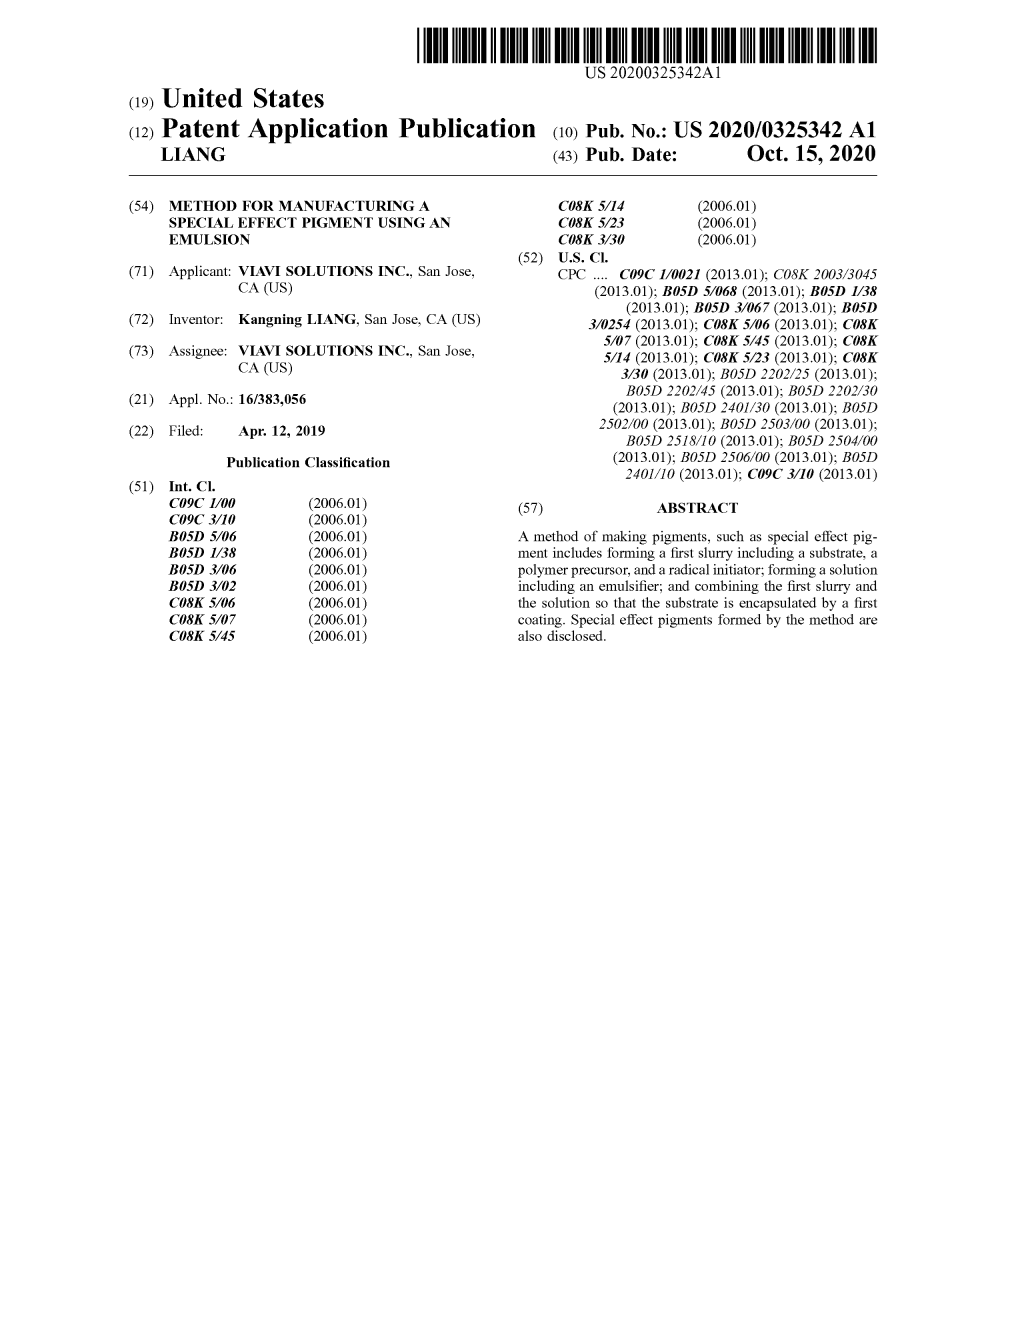 ( 12 ) Patent Application Publication ( 10 ) Pub . No .: US 2020/0325342 A1 LIANG (43 ) Pub